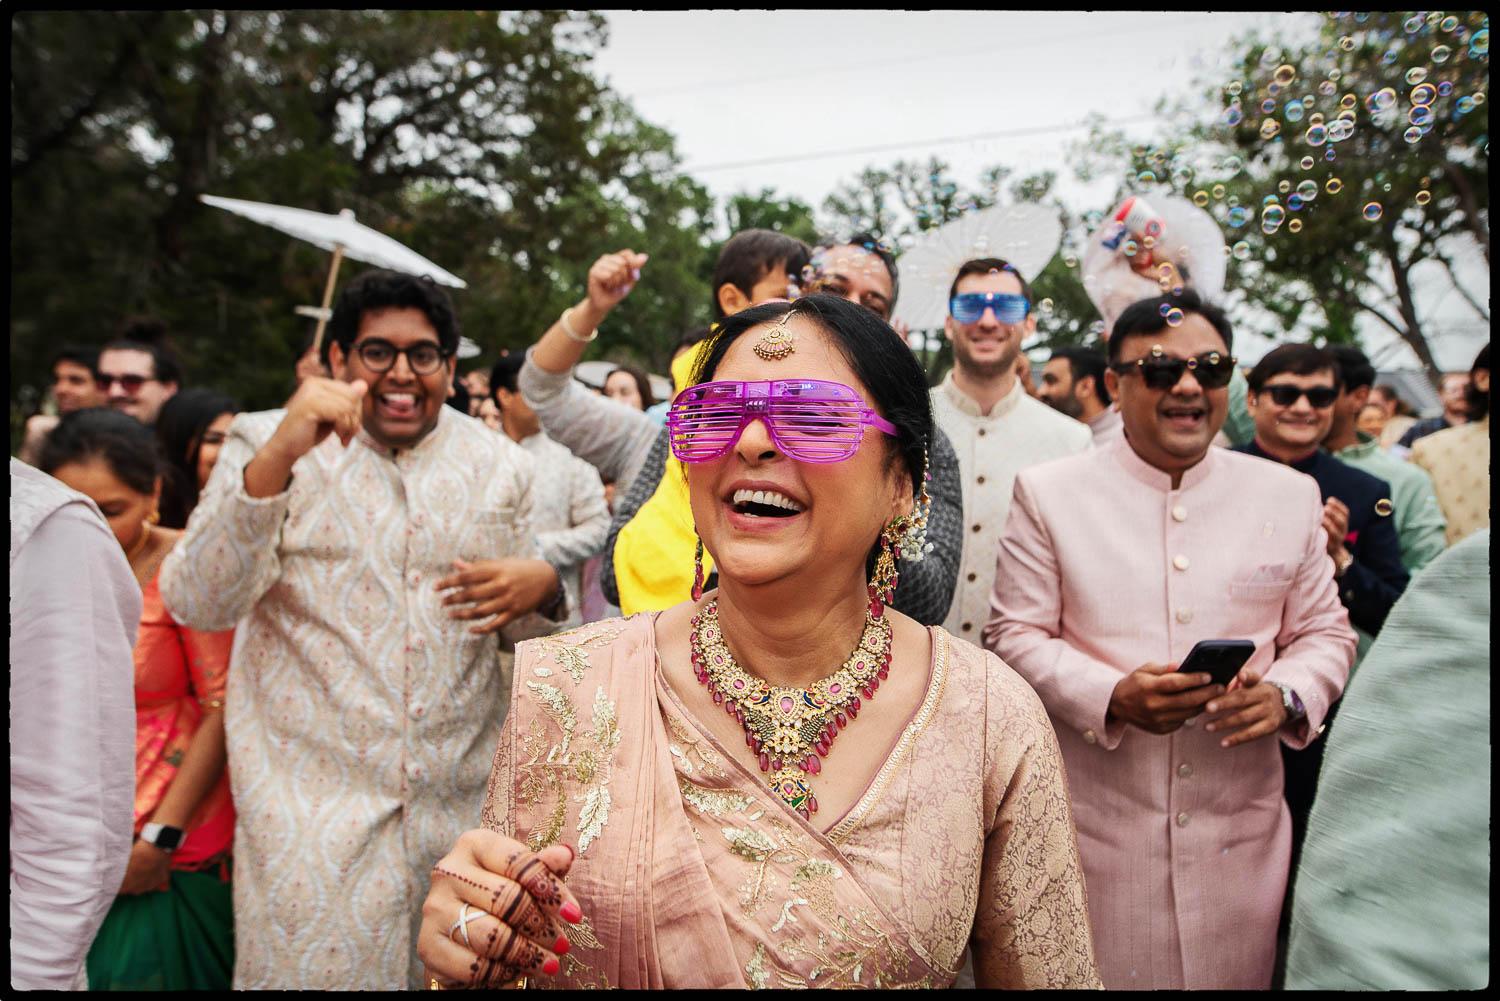 051 The Videre Estate South Asian Wedding in Wimberley Texas Philip Thomas wedding photographer CM2 3524 Edit